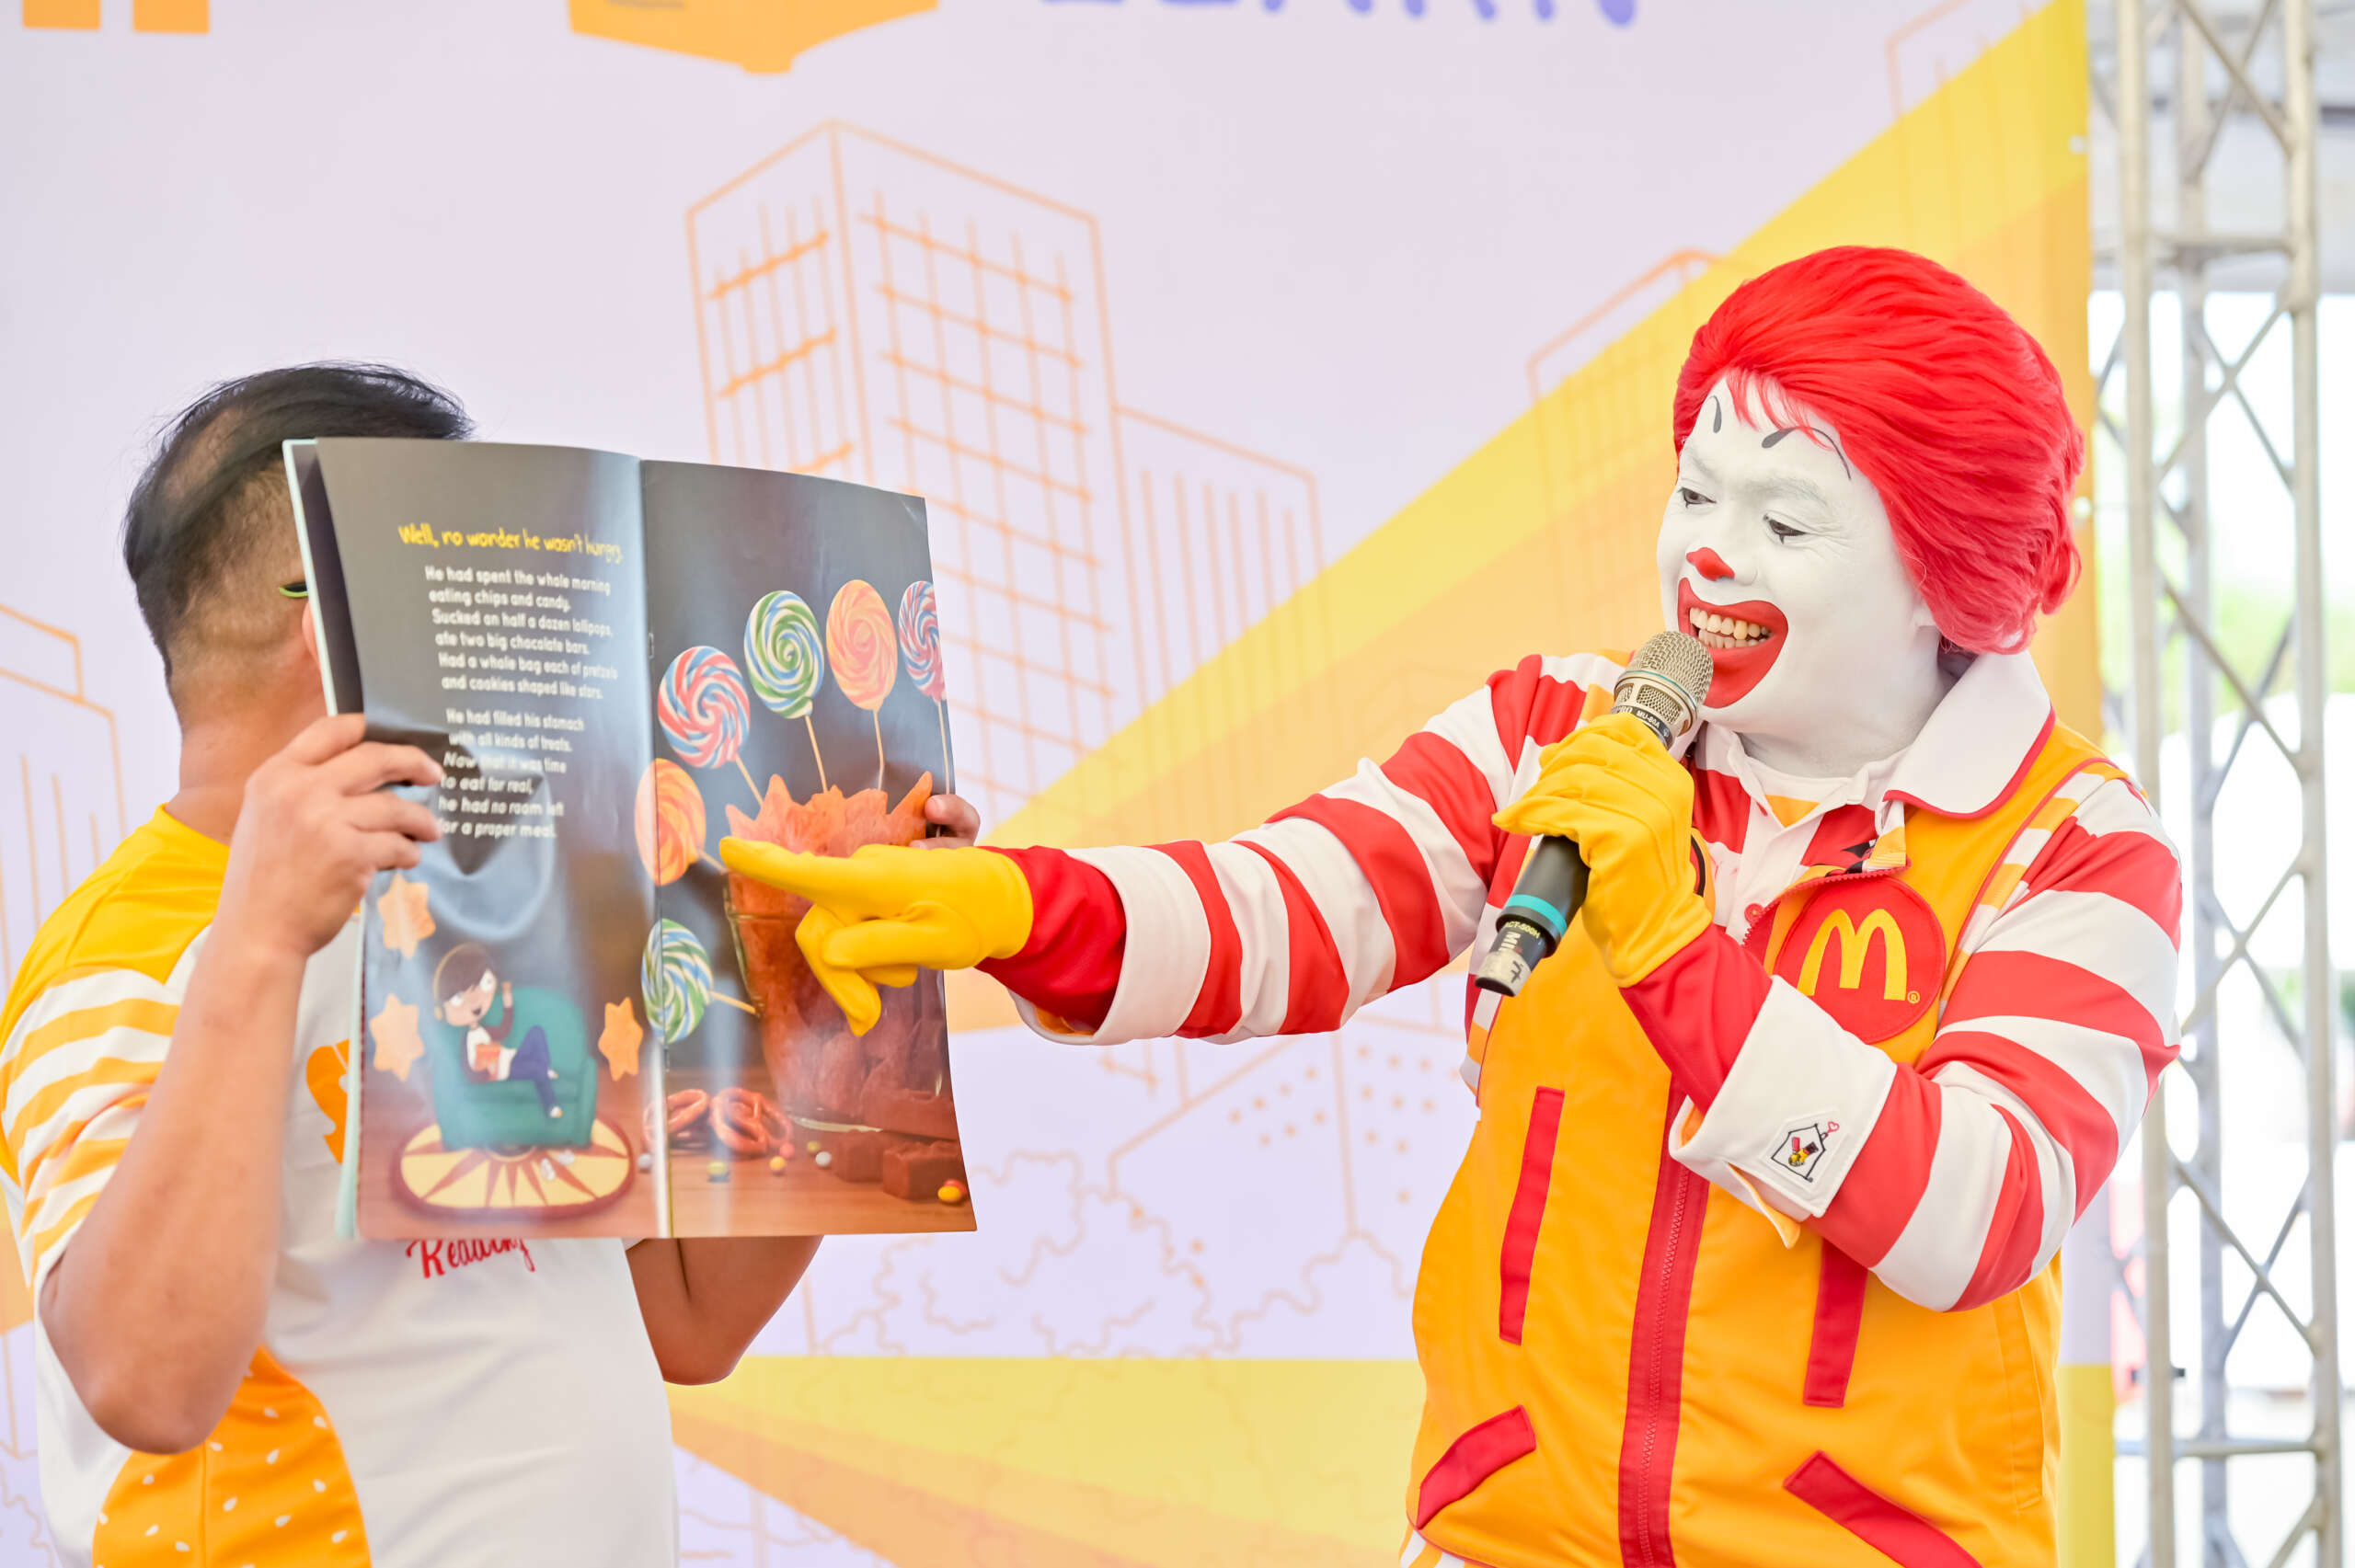 McDonald’s Stripes Run participants raised P1 million for children’s literacy